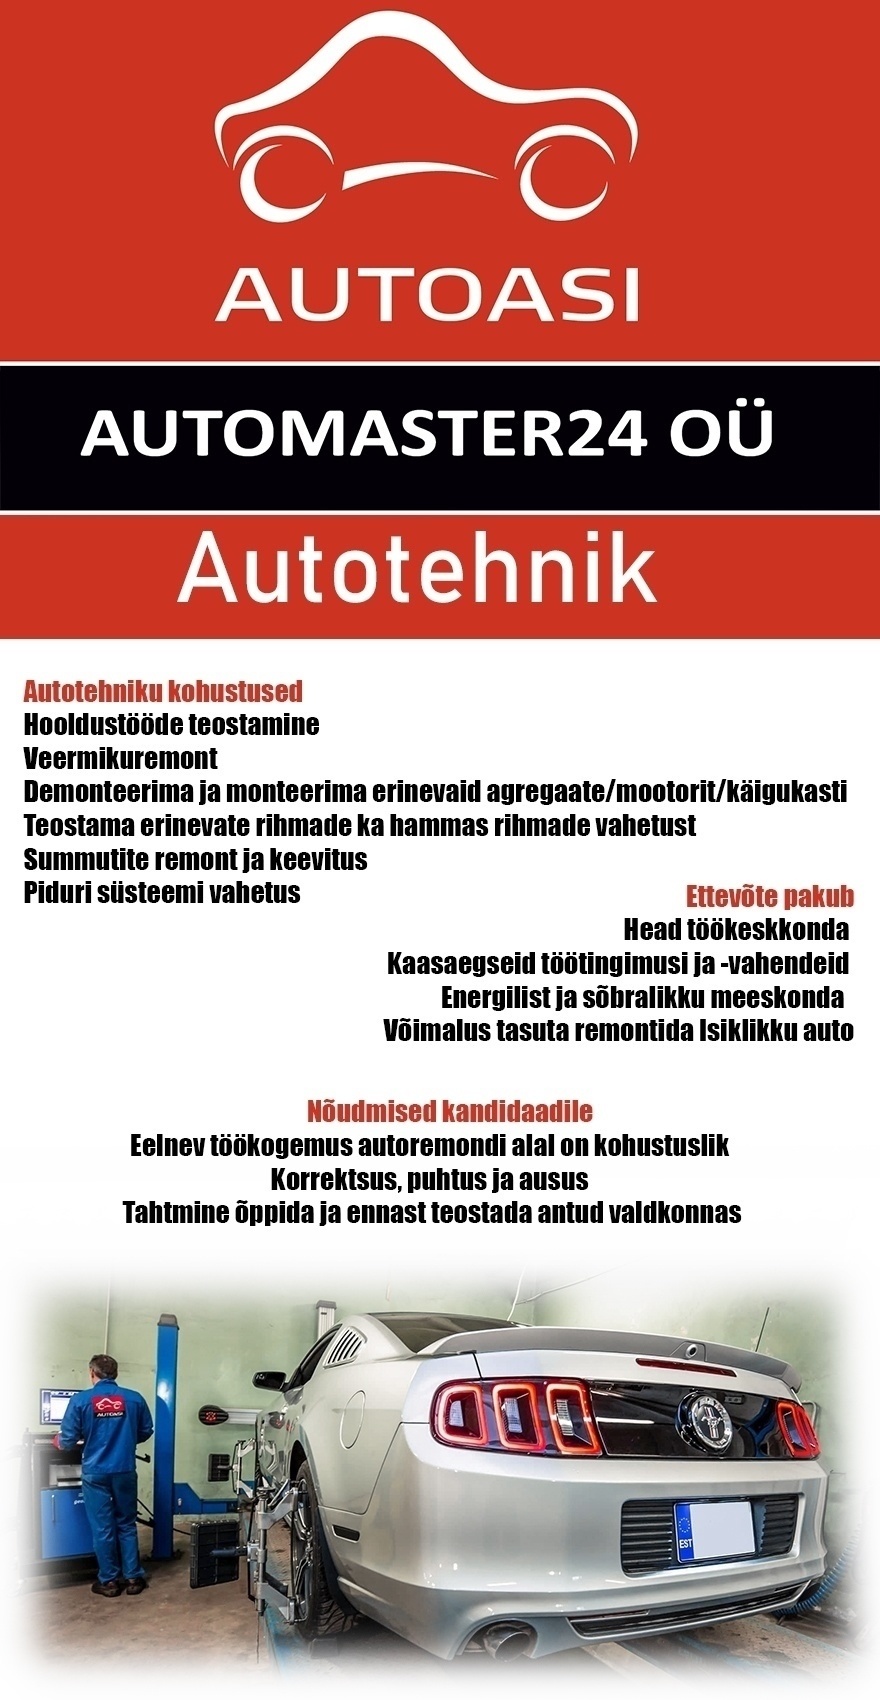 Automaster24 OÜ Autotehnik